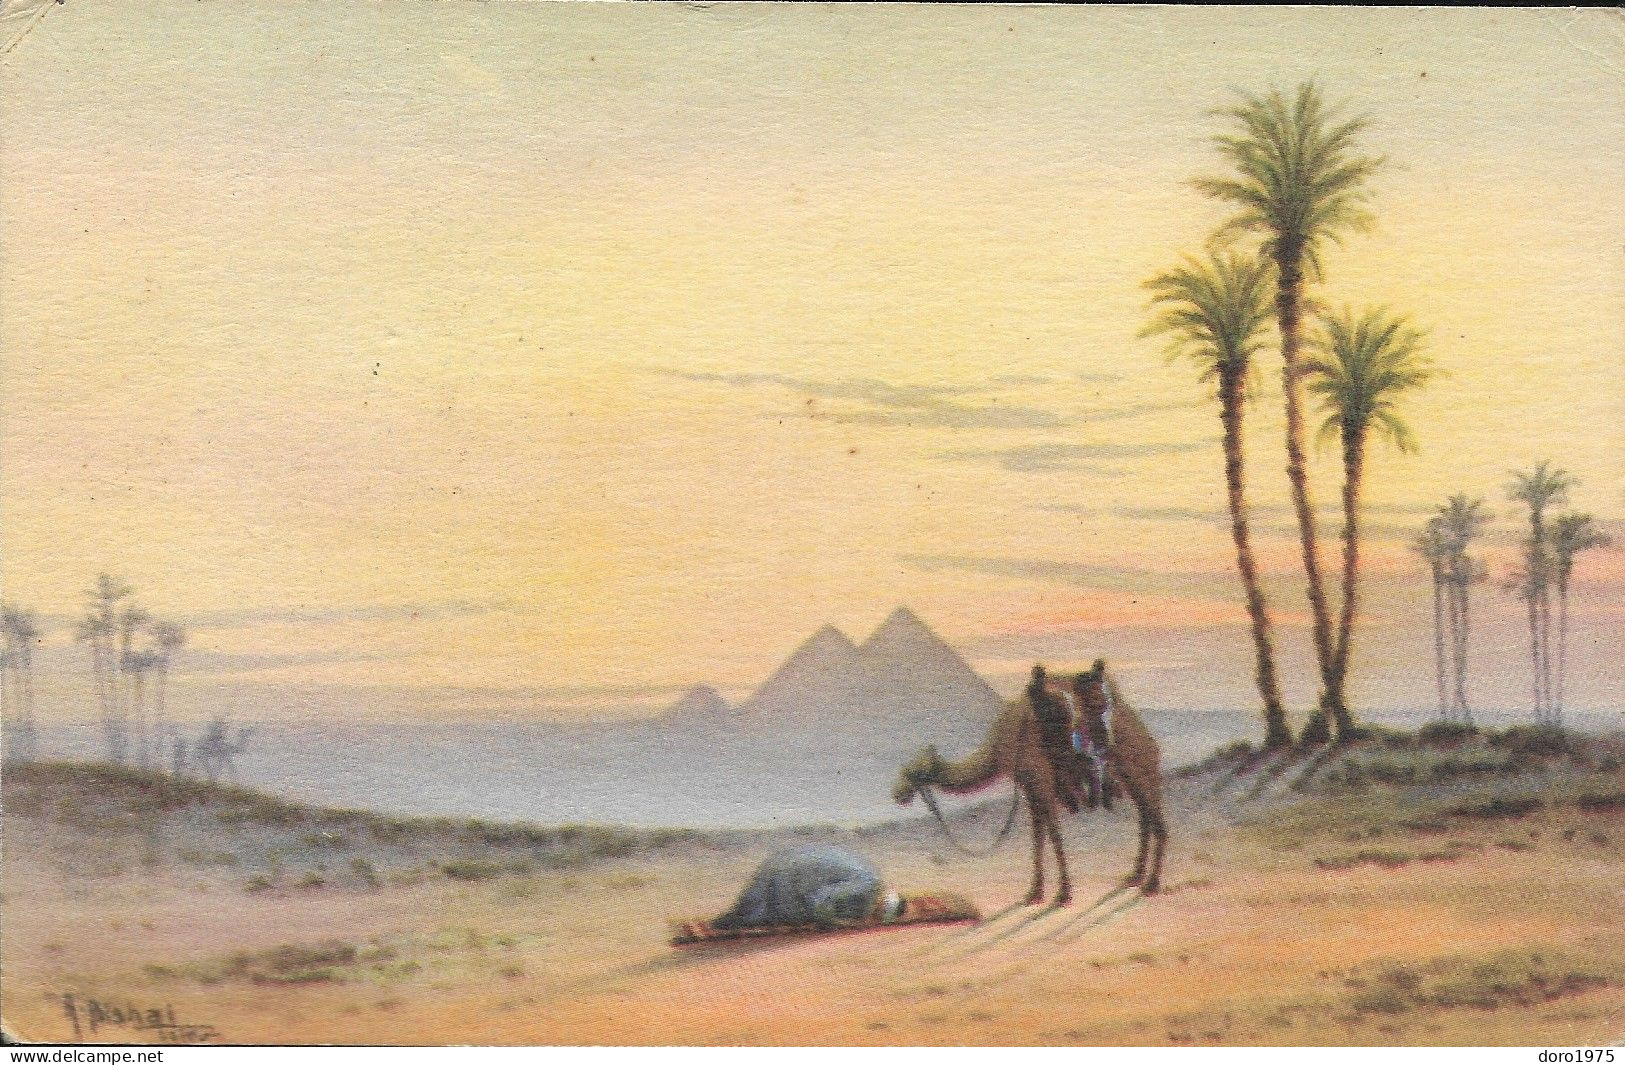 EGYPT - Prayer In The Desert At Sunrise, Near The Pyramids Of Giza - A. Bishai - No. 111 - Unused Postcard (01) - Pyramides